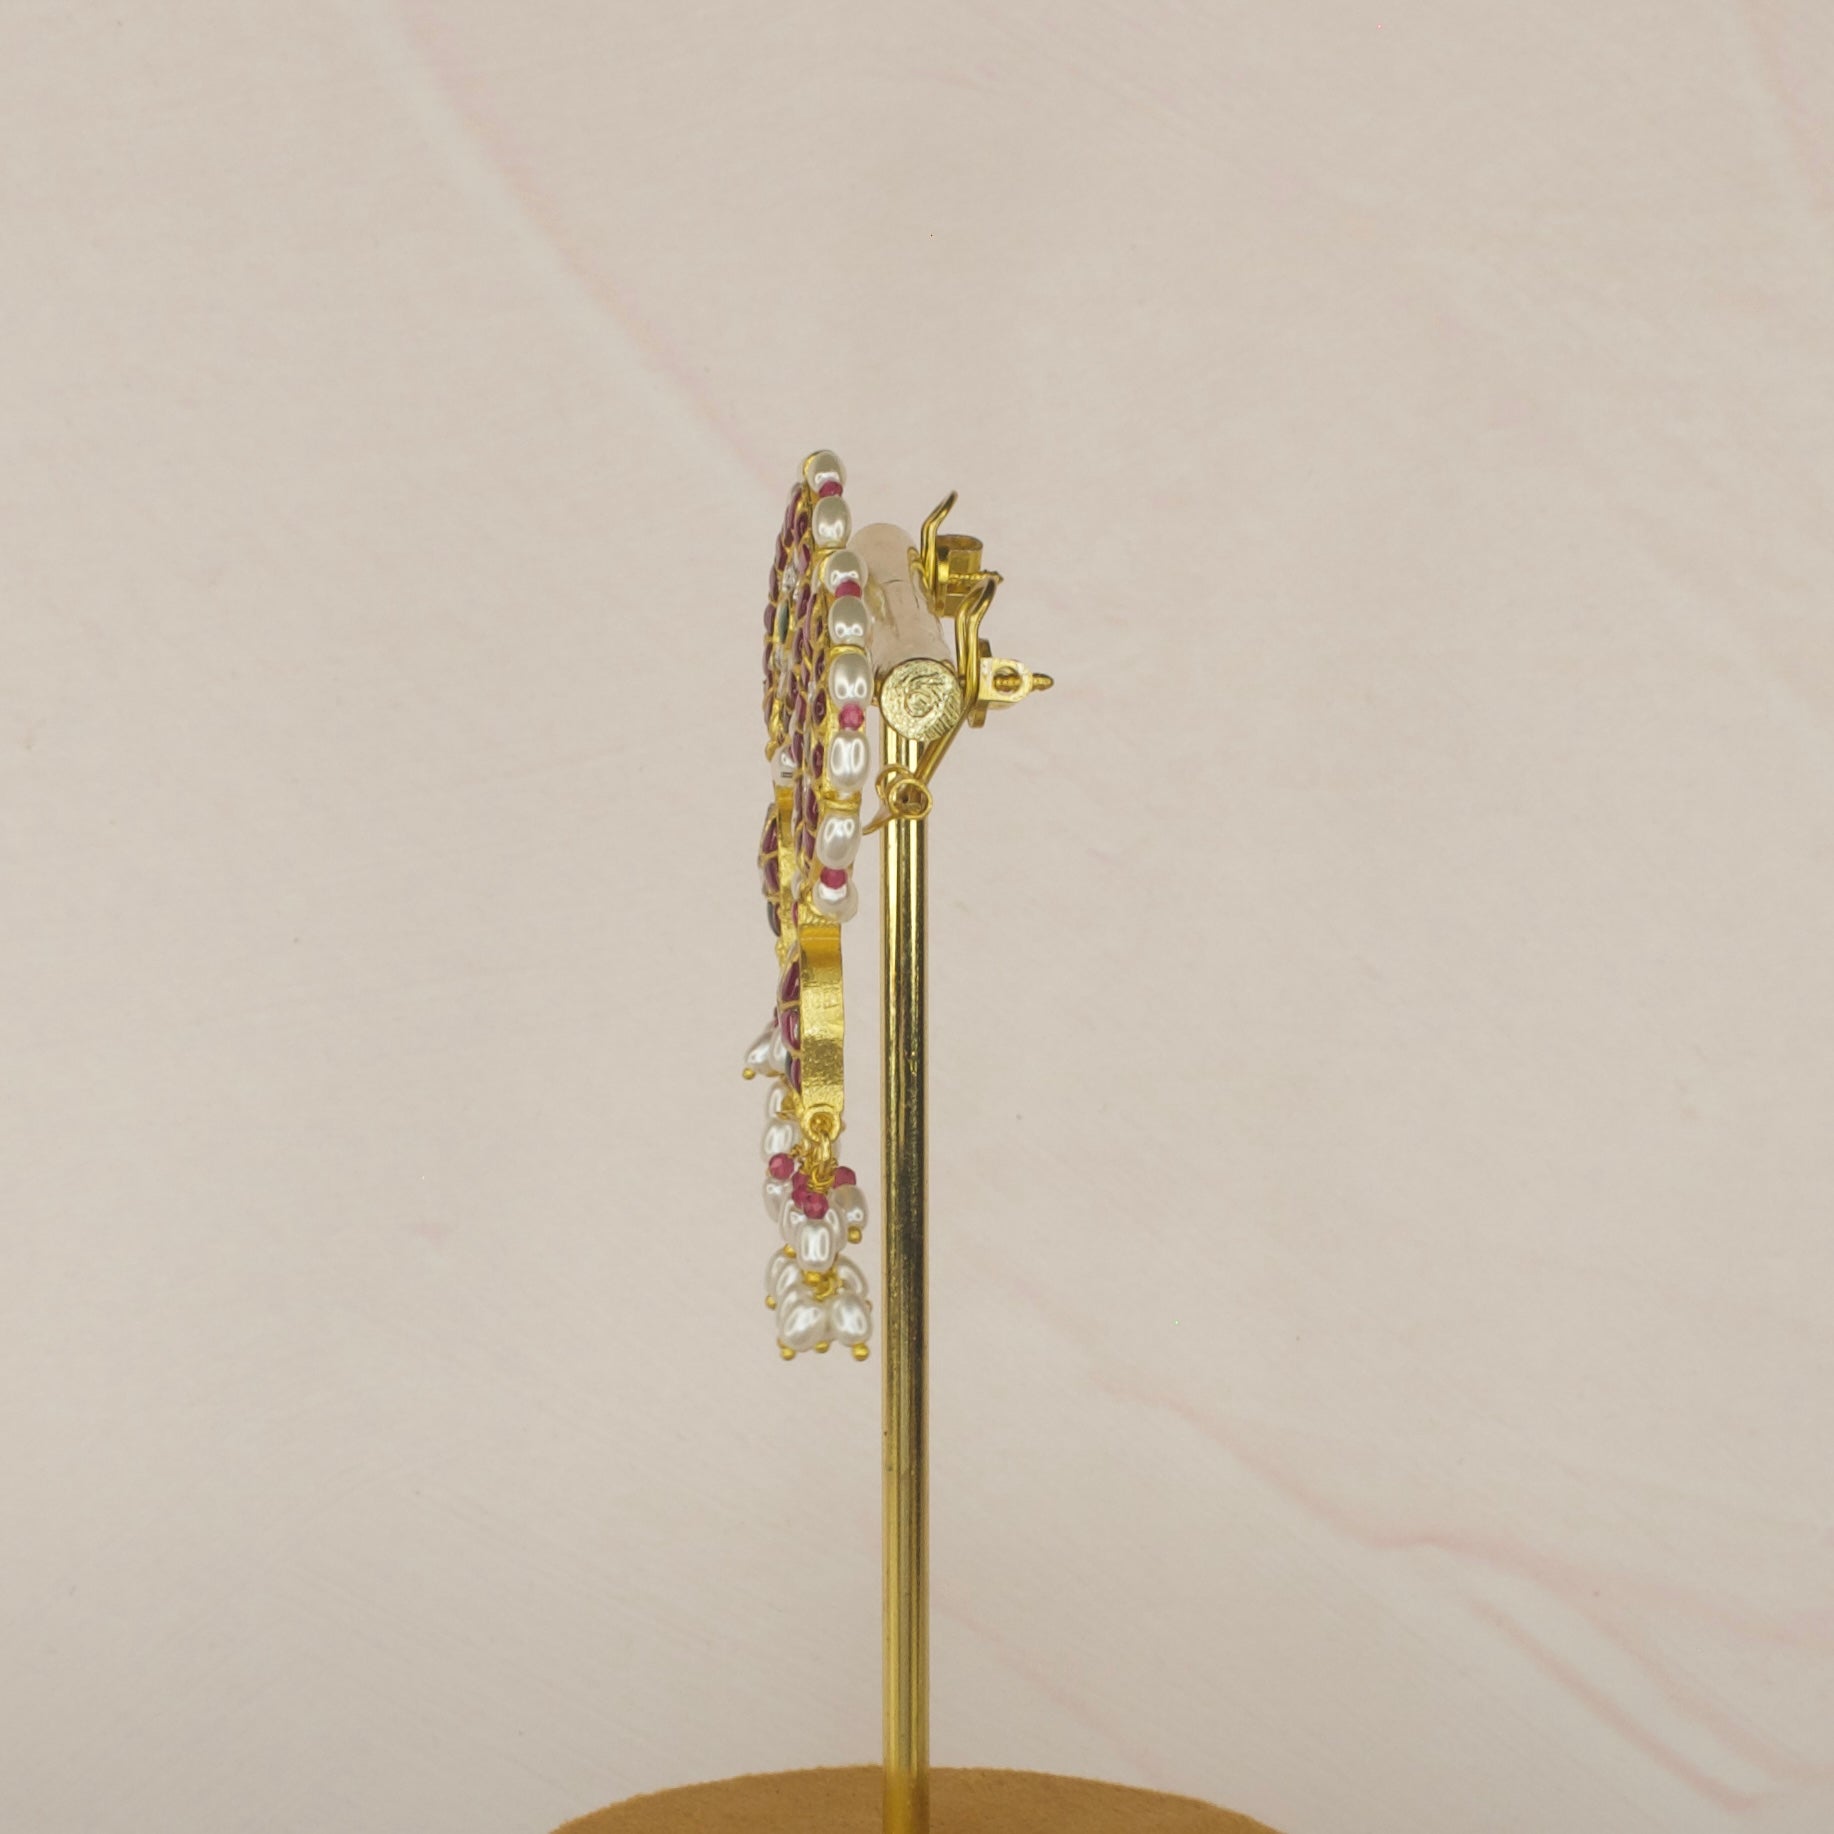 Floral Jadau Kundan Earrings with Rice Pearls with 22k gold plating. This product belongs to Jadau Kundan Jewellery category